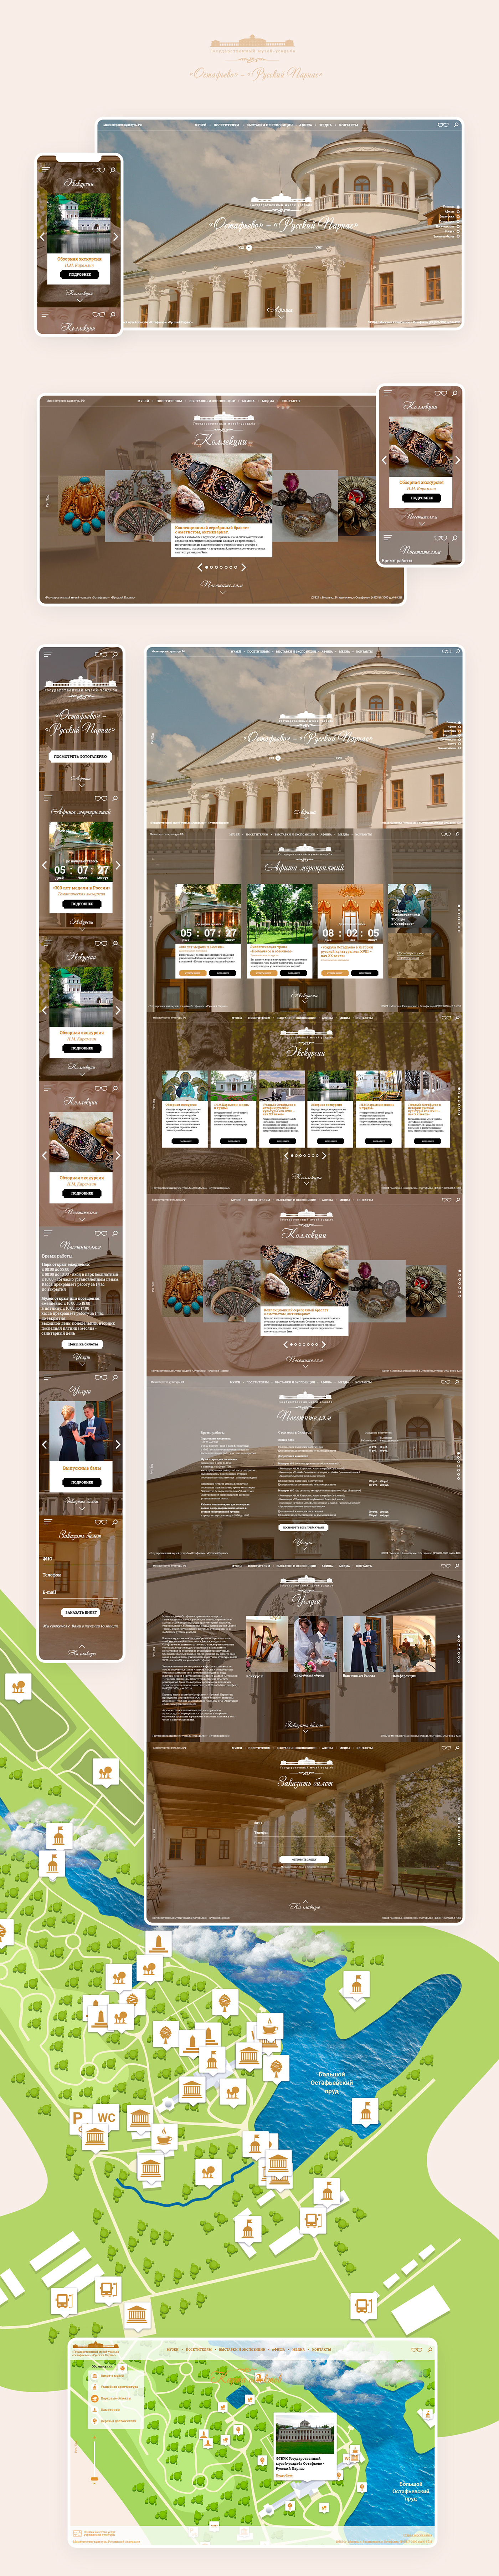 museum Ostafyevo museum site web-design